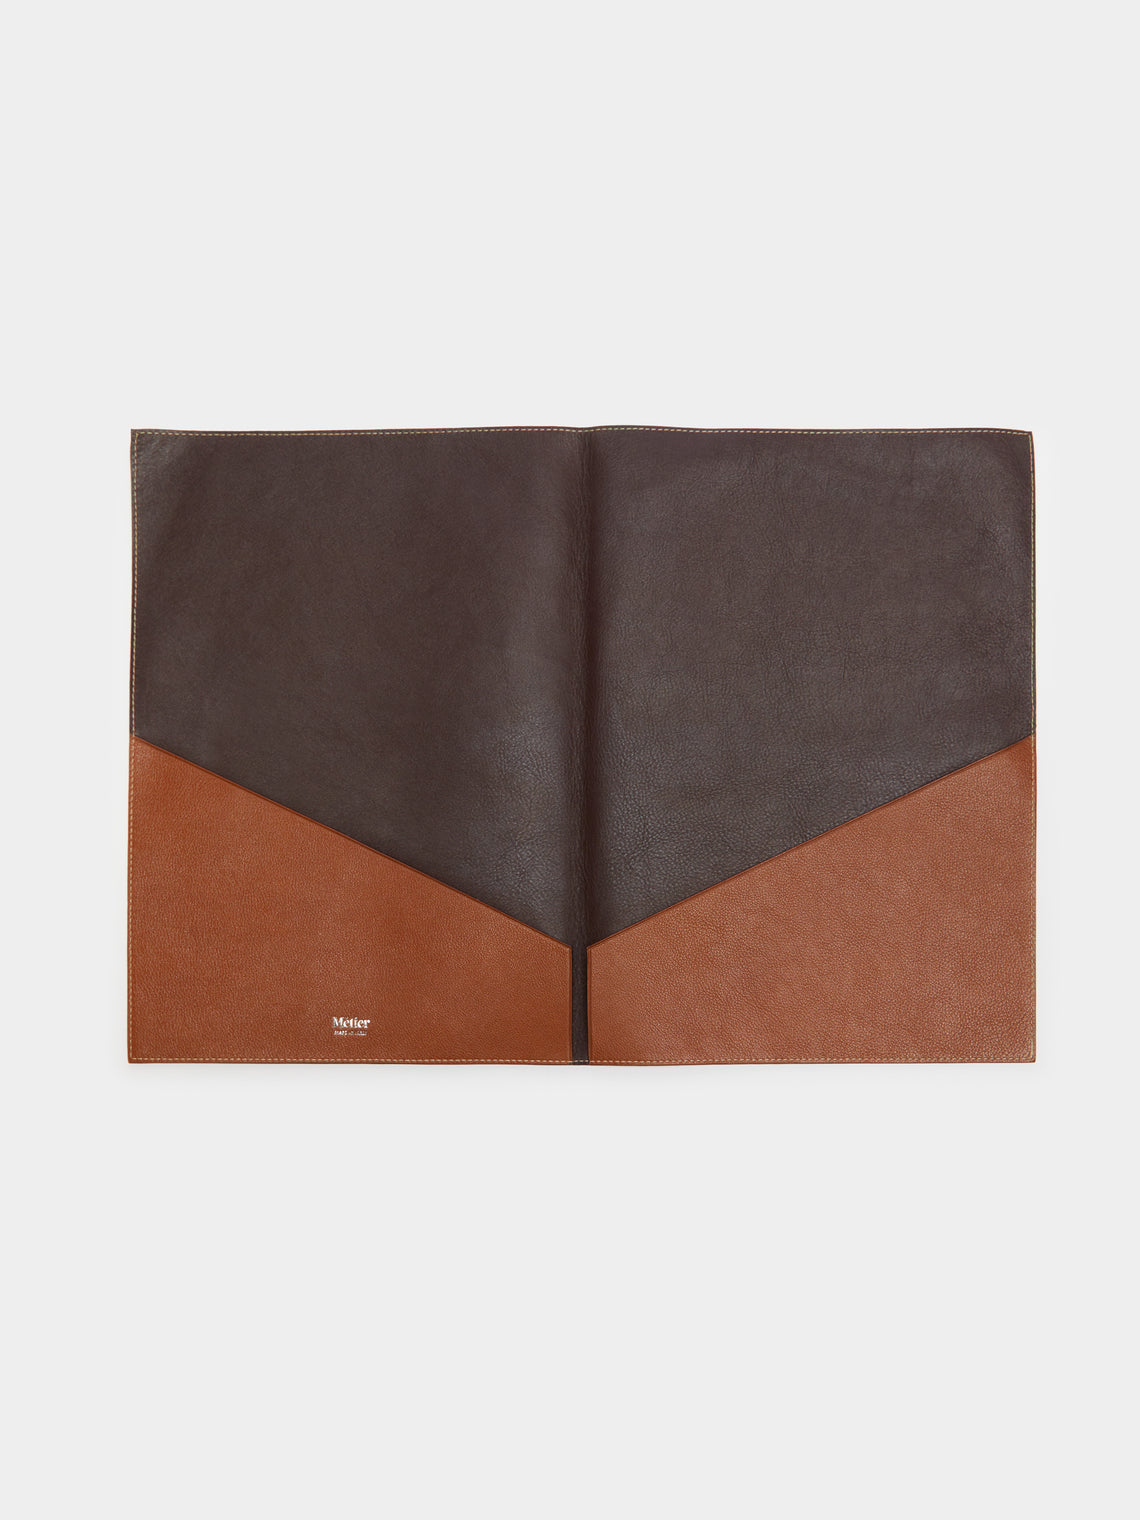 Métier - A4 Leather Document Folder - Brown - ABASK